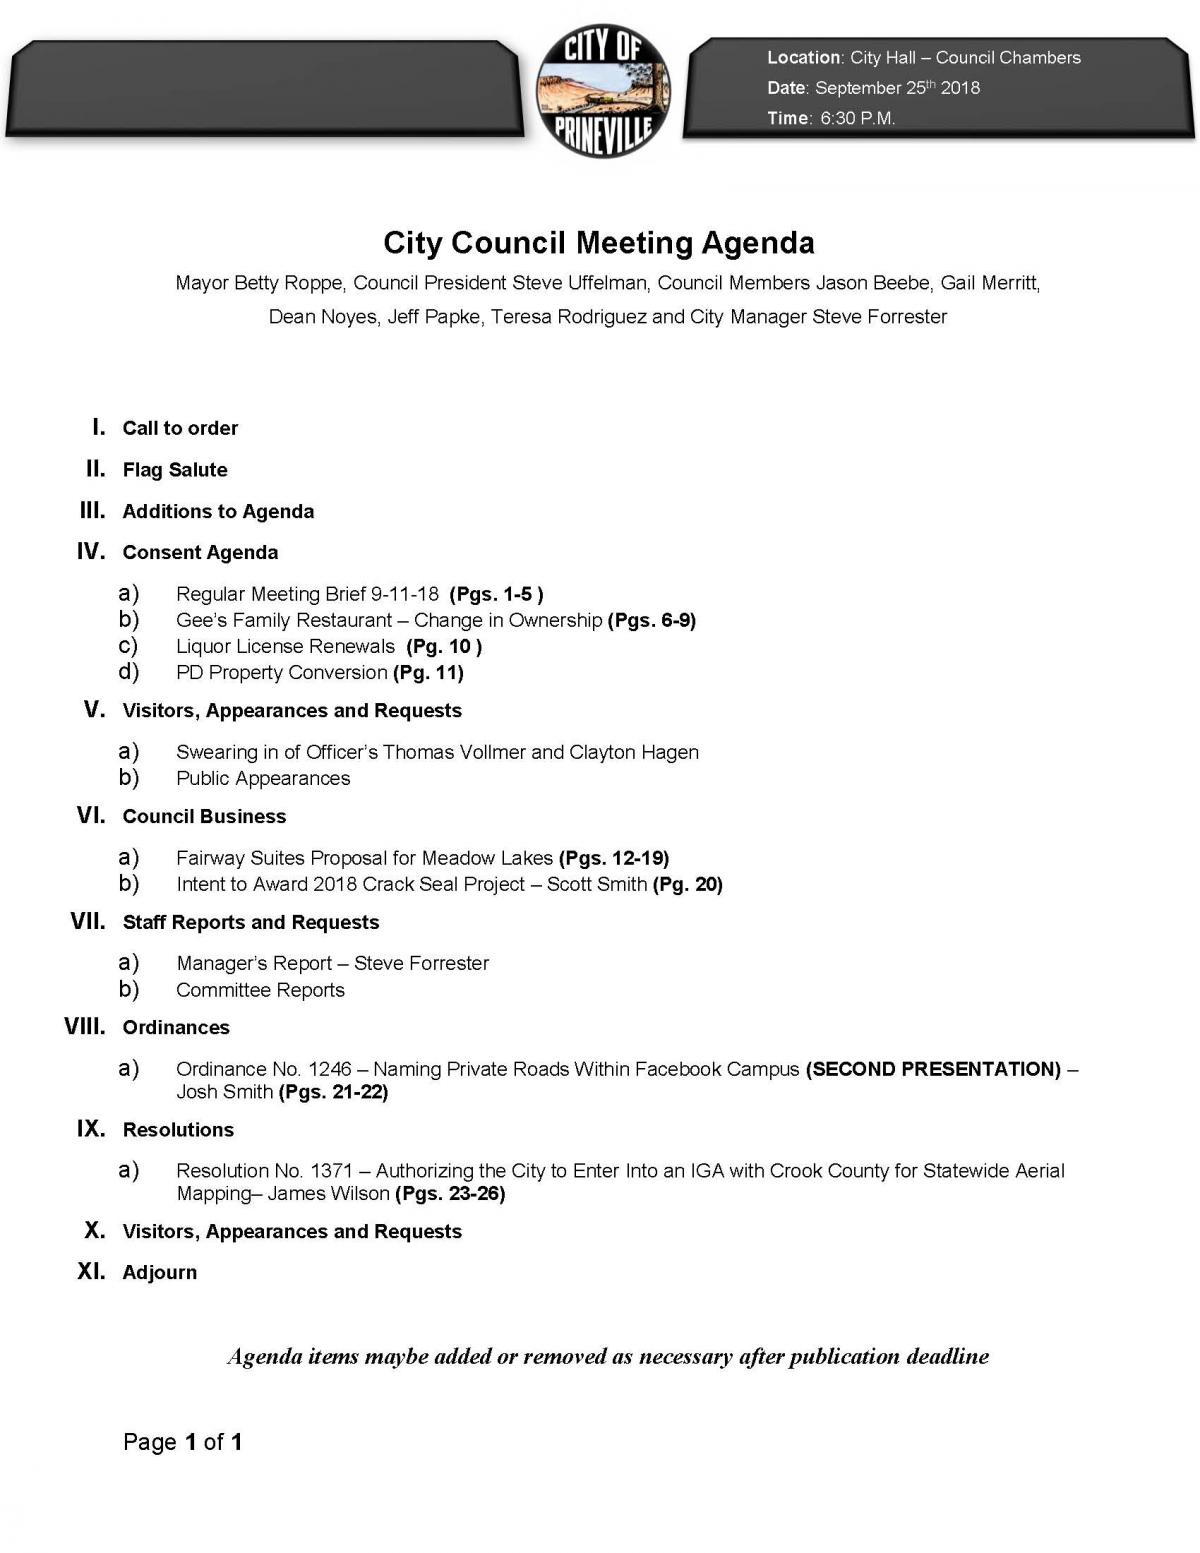 Council Agenda 9-25-18